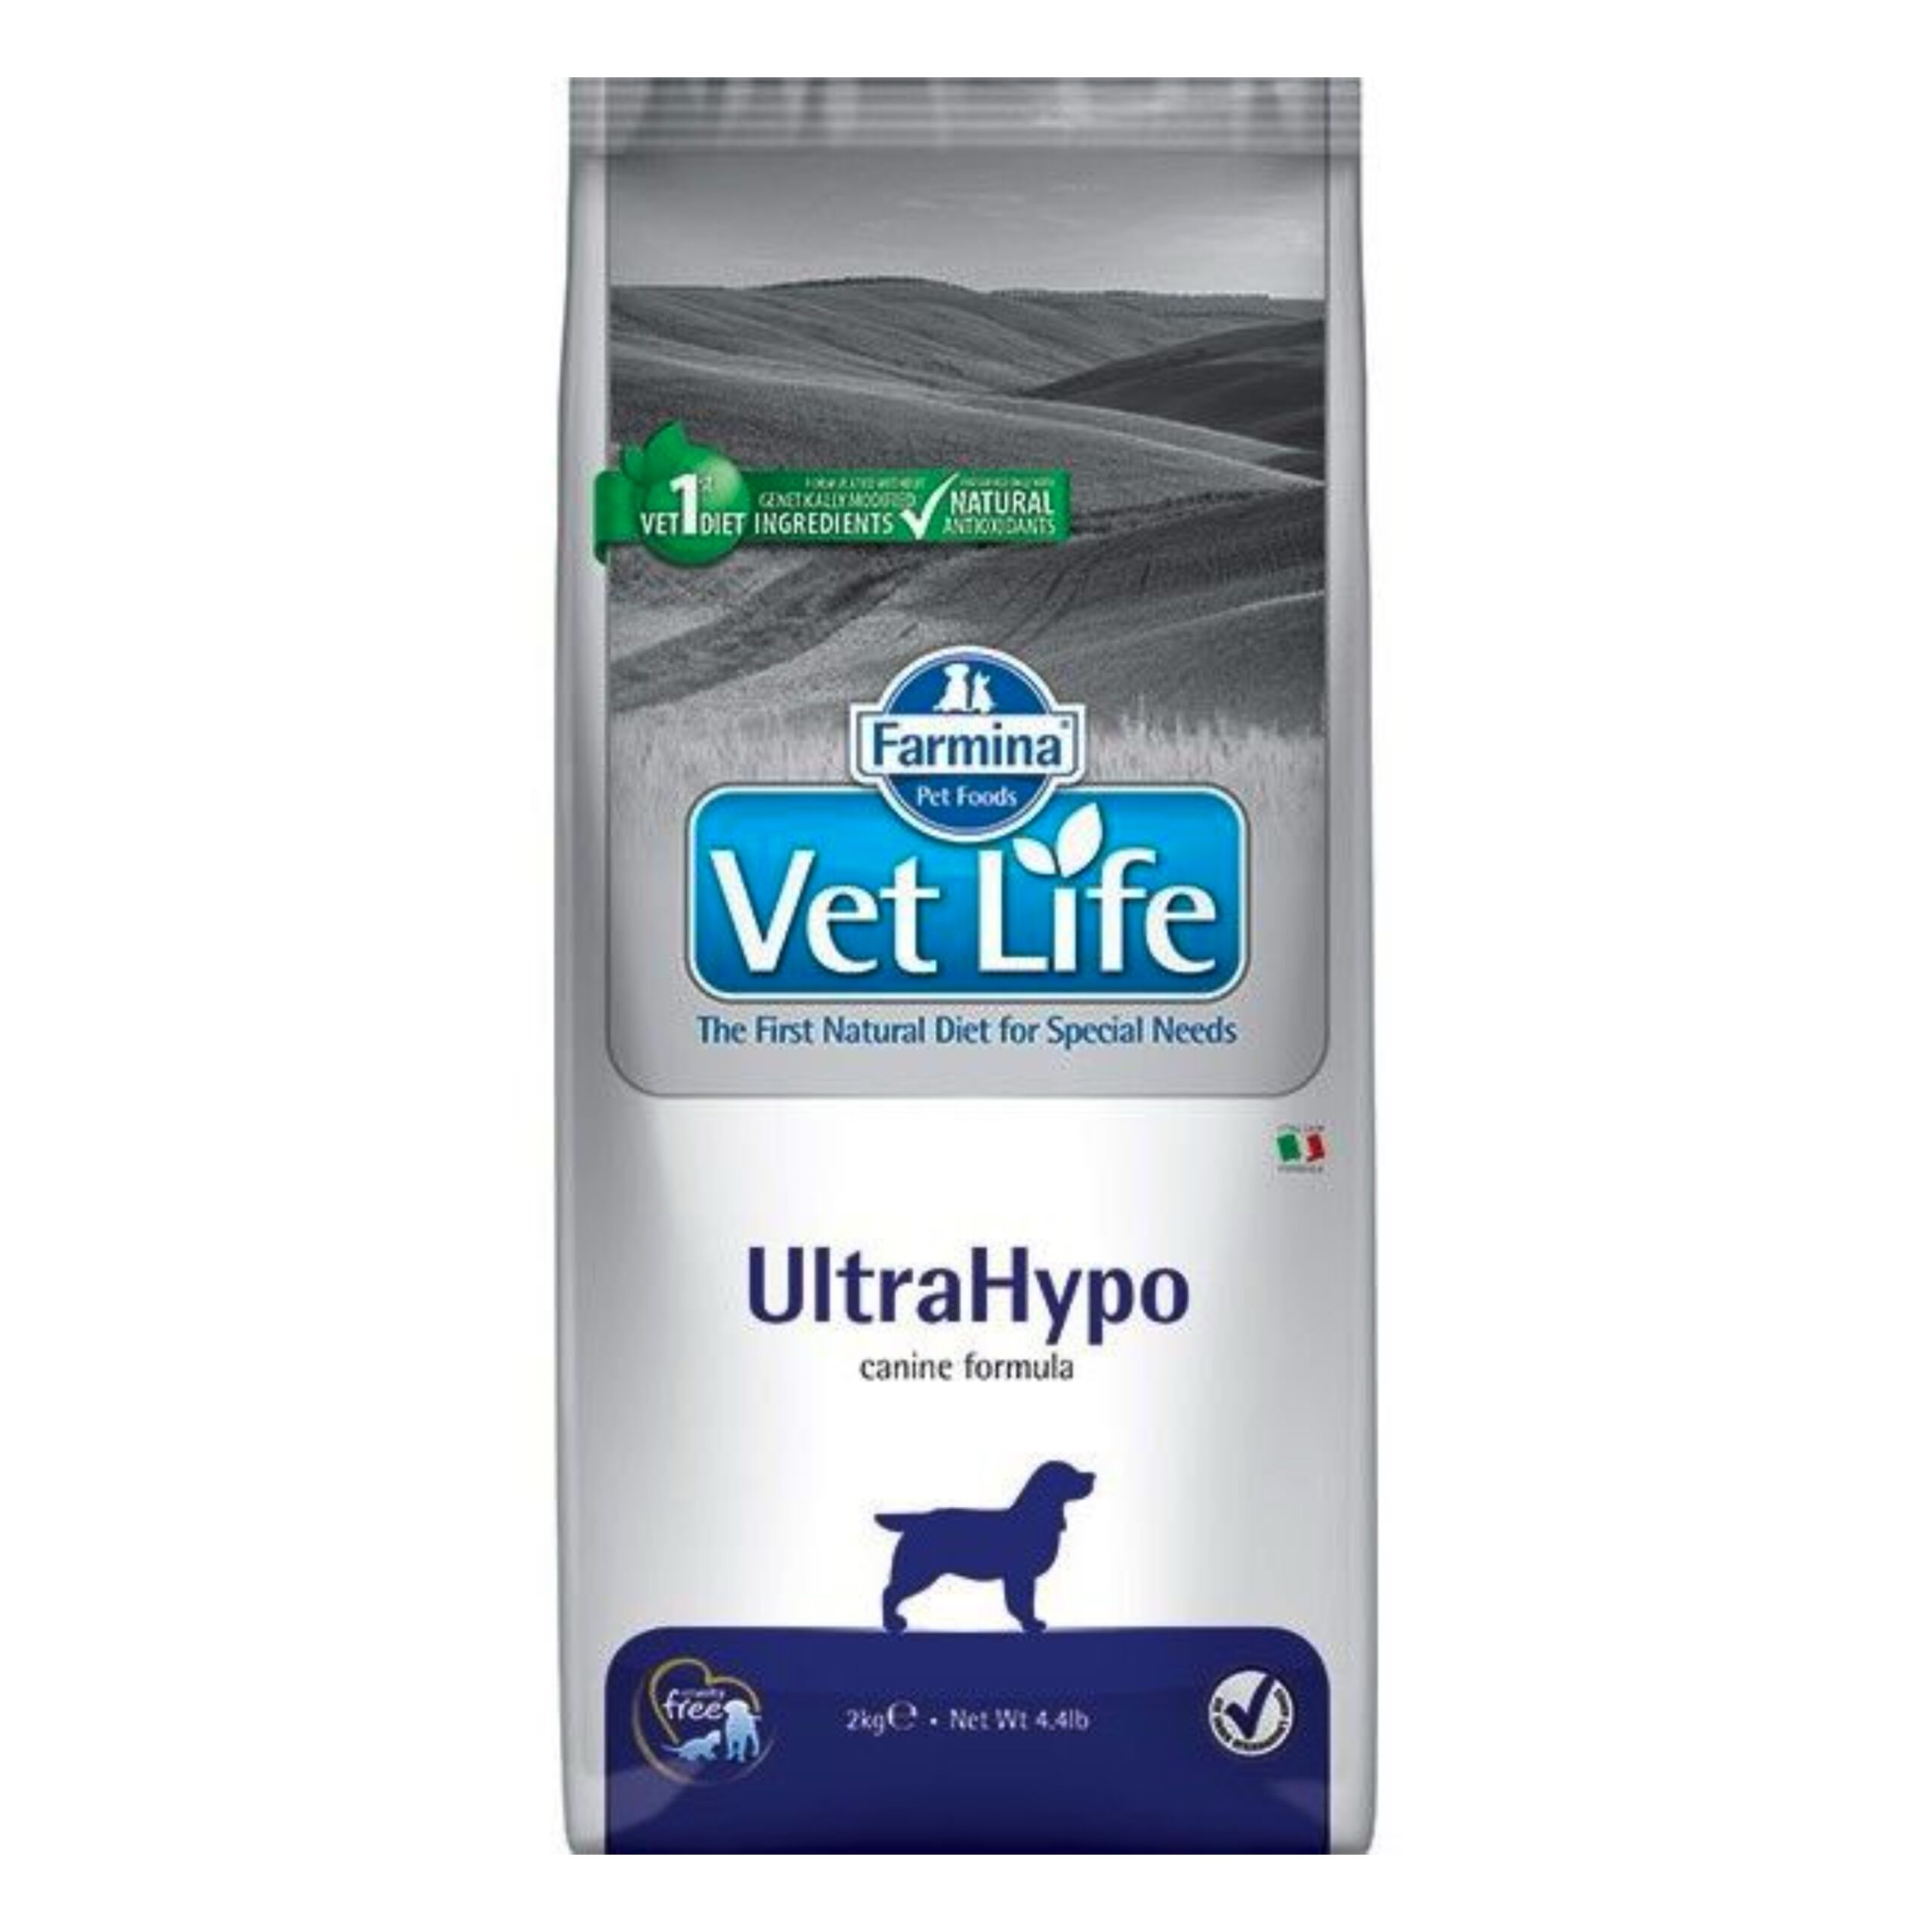 Вет лайф корм для собак. Farmina vet Life Cat ULTRAHYPO. Vet Life Gastrointestinal корм. Vet Life Struvite Management корм для кошек. Корм Farmina Gastrointestinal для собак.